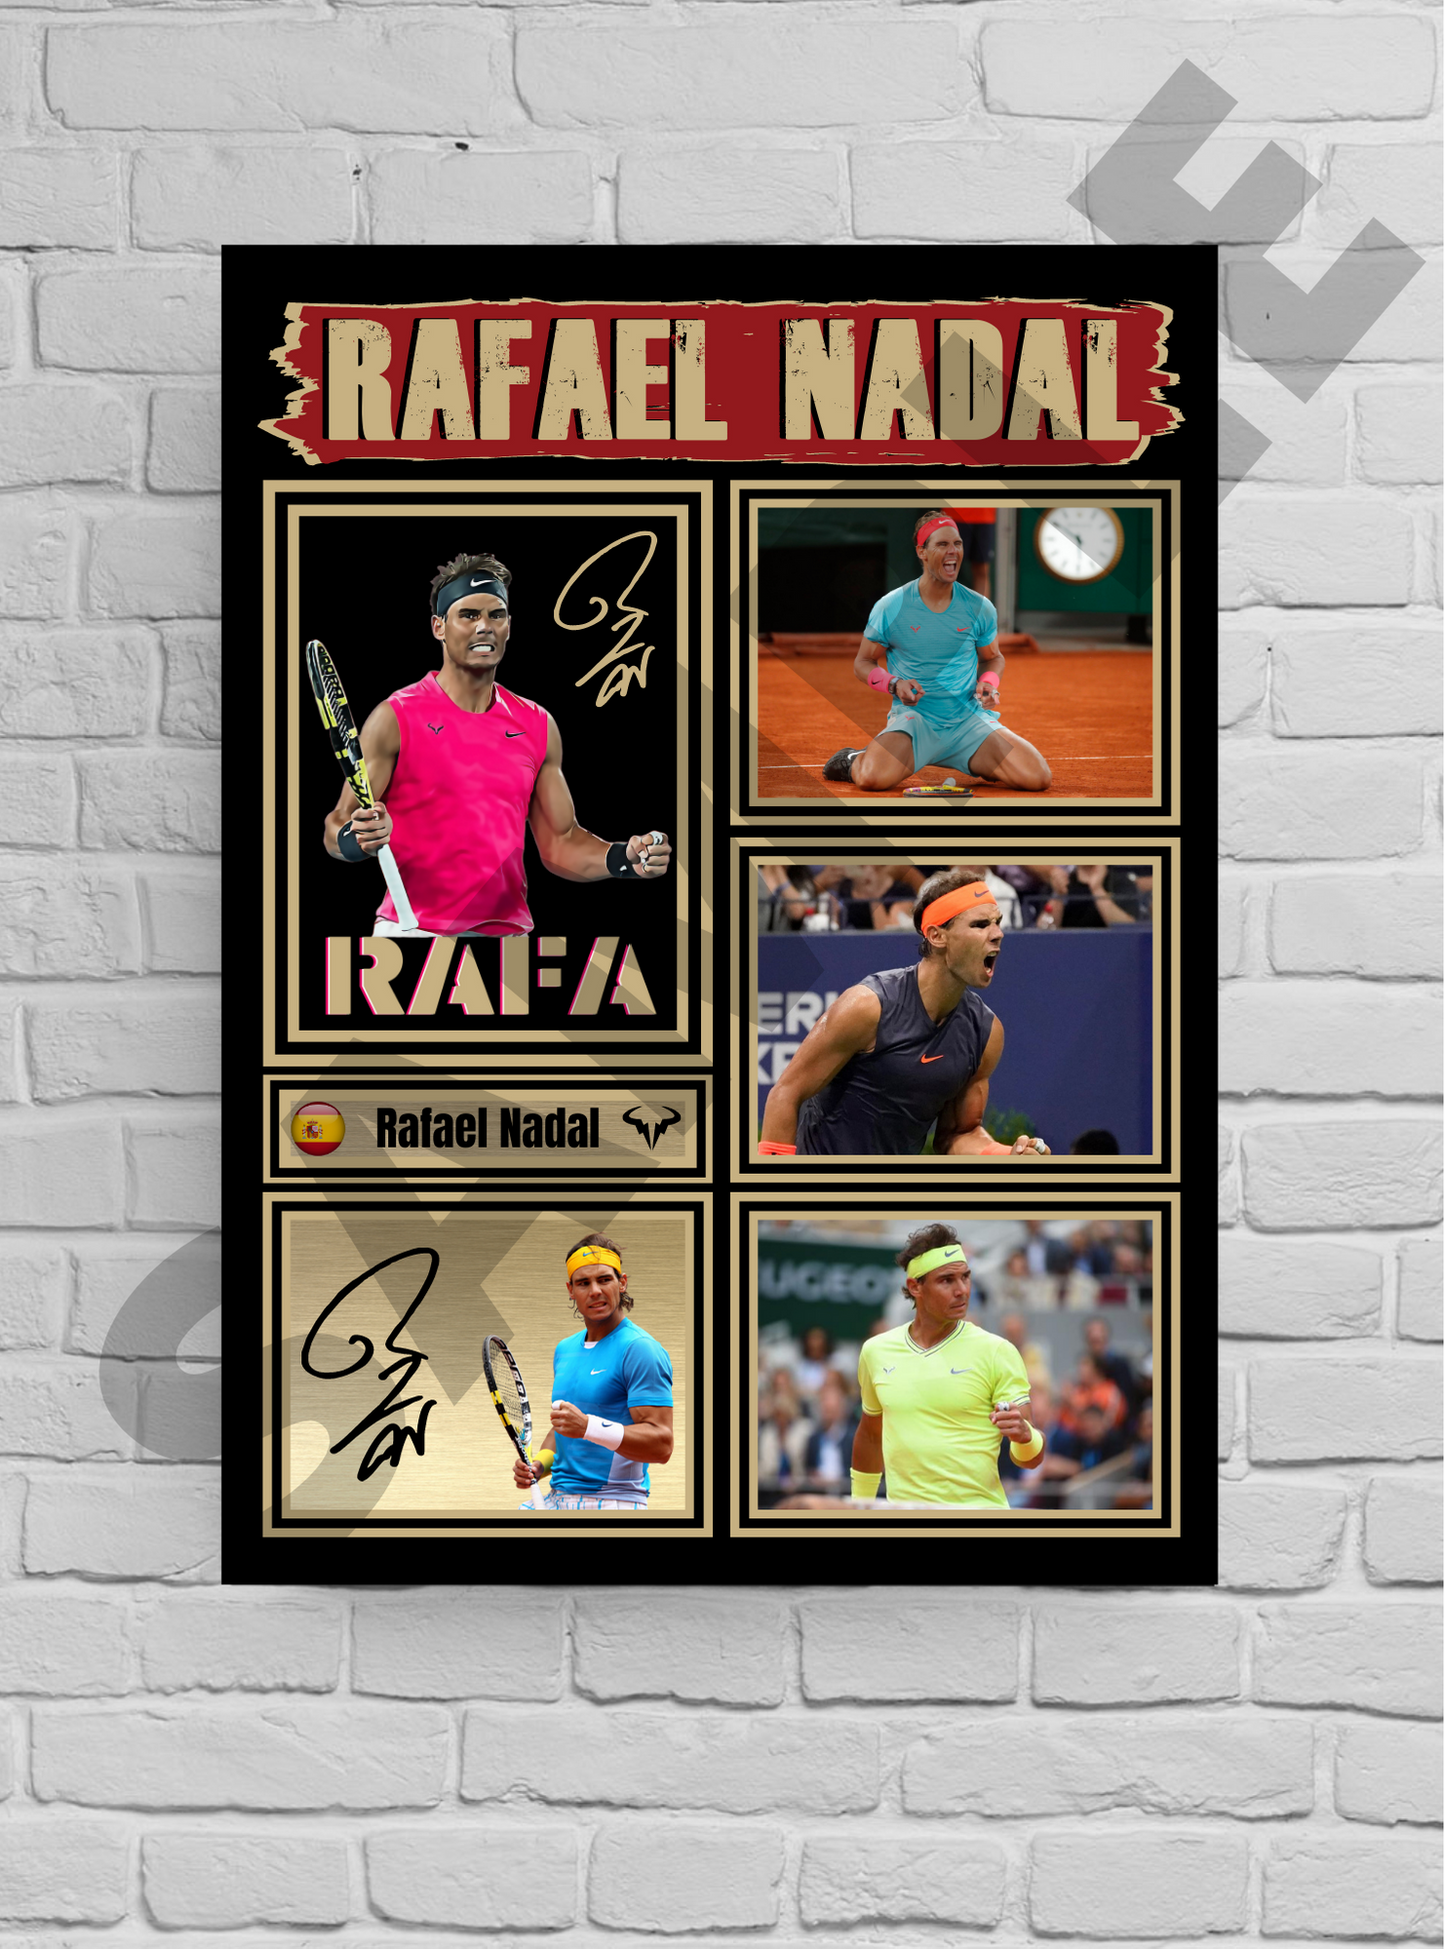 Rafael 'Rafa' Nadal (Tennis) #50 - Memorabilia/Collectible/print signed